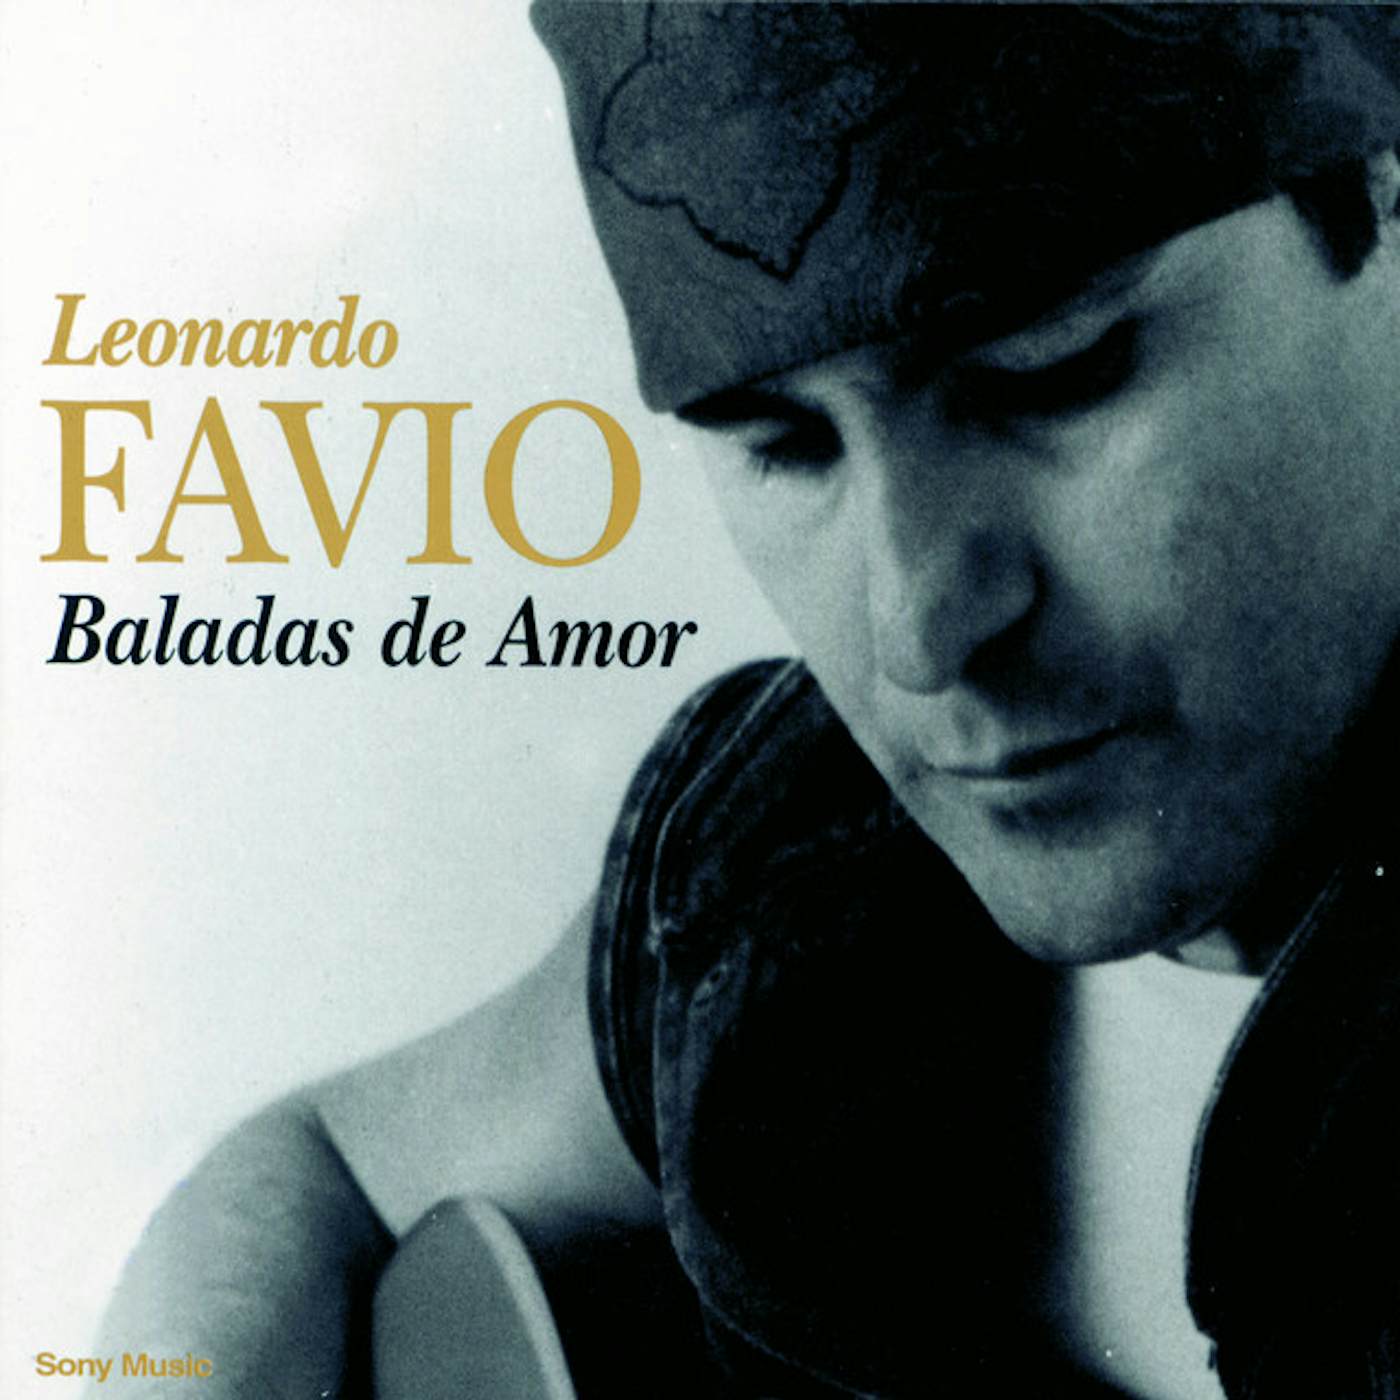 Leonardo Favio BALADAS DE AMOR CD